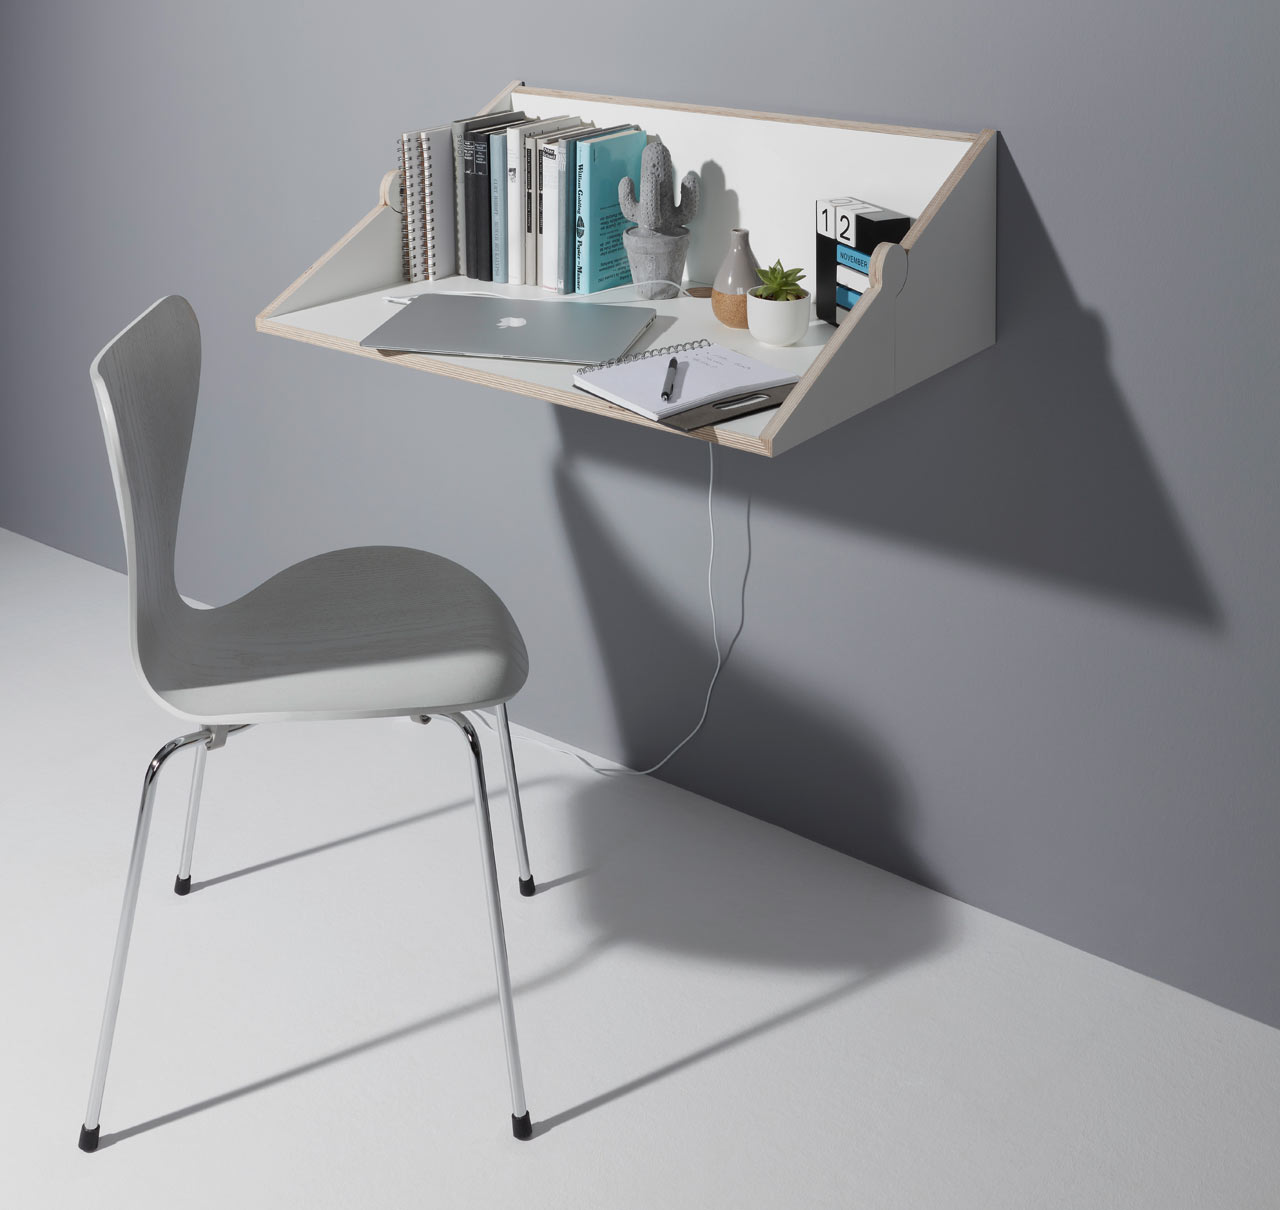 twofold Space Saving Wall Shelf/Desk Hybrid by studio michael hilgers